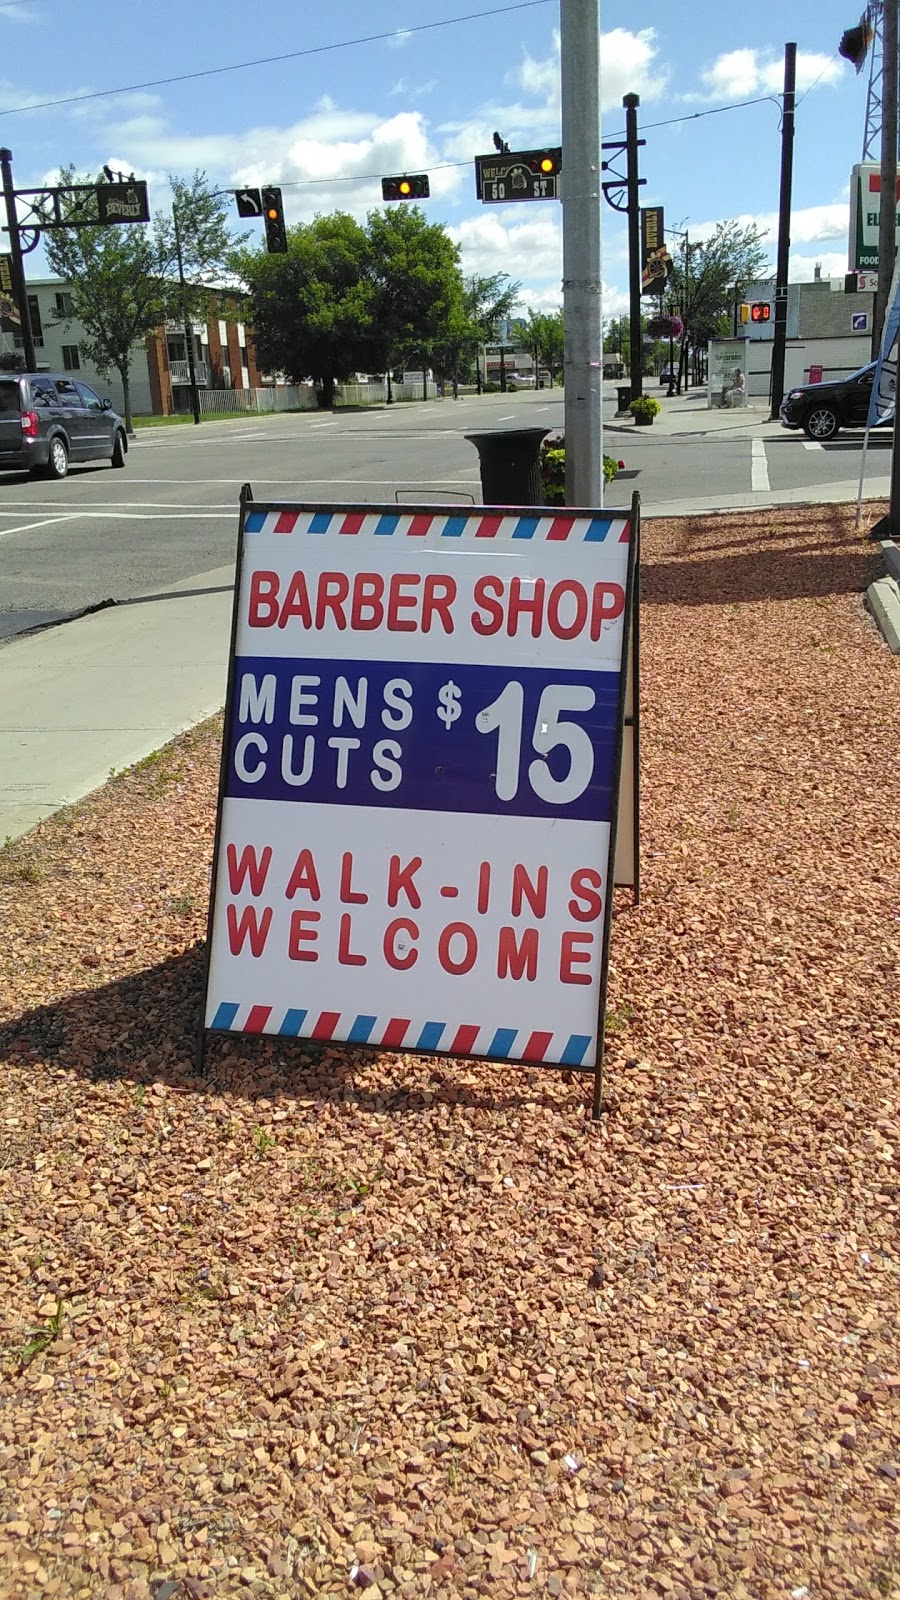 Eastside Barbershop | hair care | 5019 118 Ave NW, Edmonton, AB T5W 1B8, Canada | 5875243278 OR +1 587-524-3278